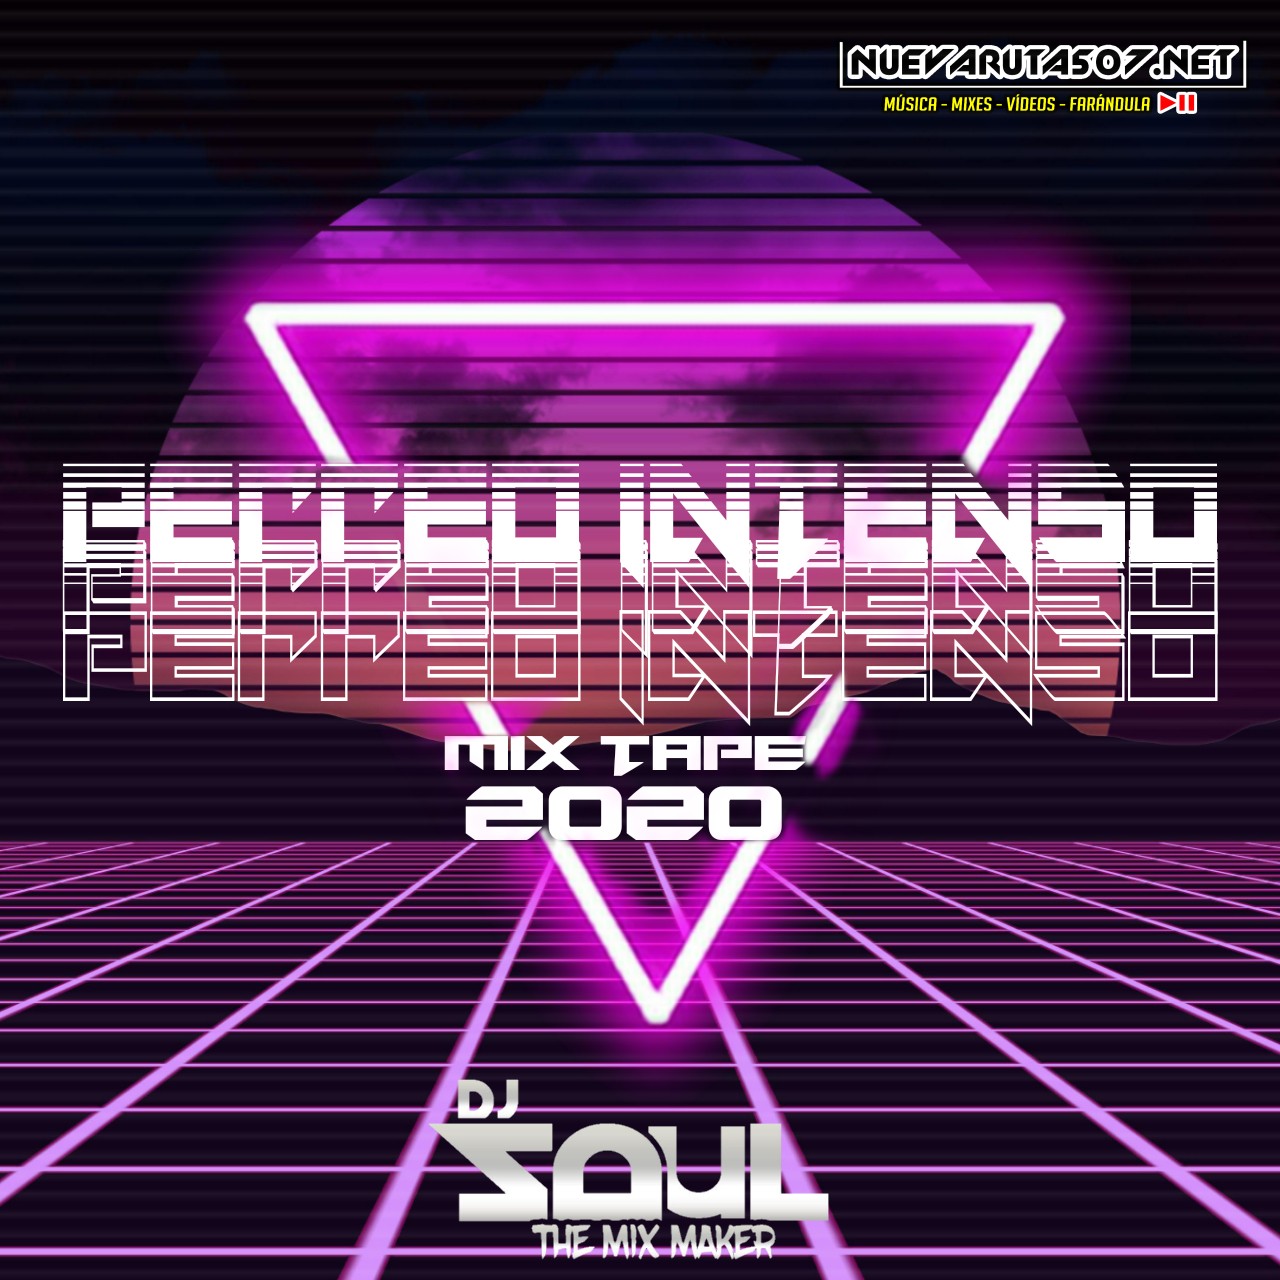 Perreo Intenso Mixtape 2020 - DjSaulOfficial.mp3